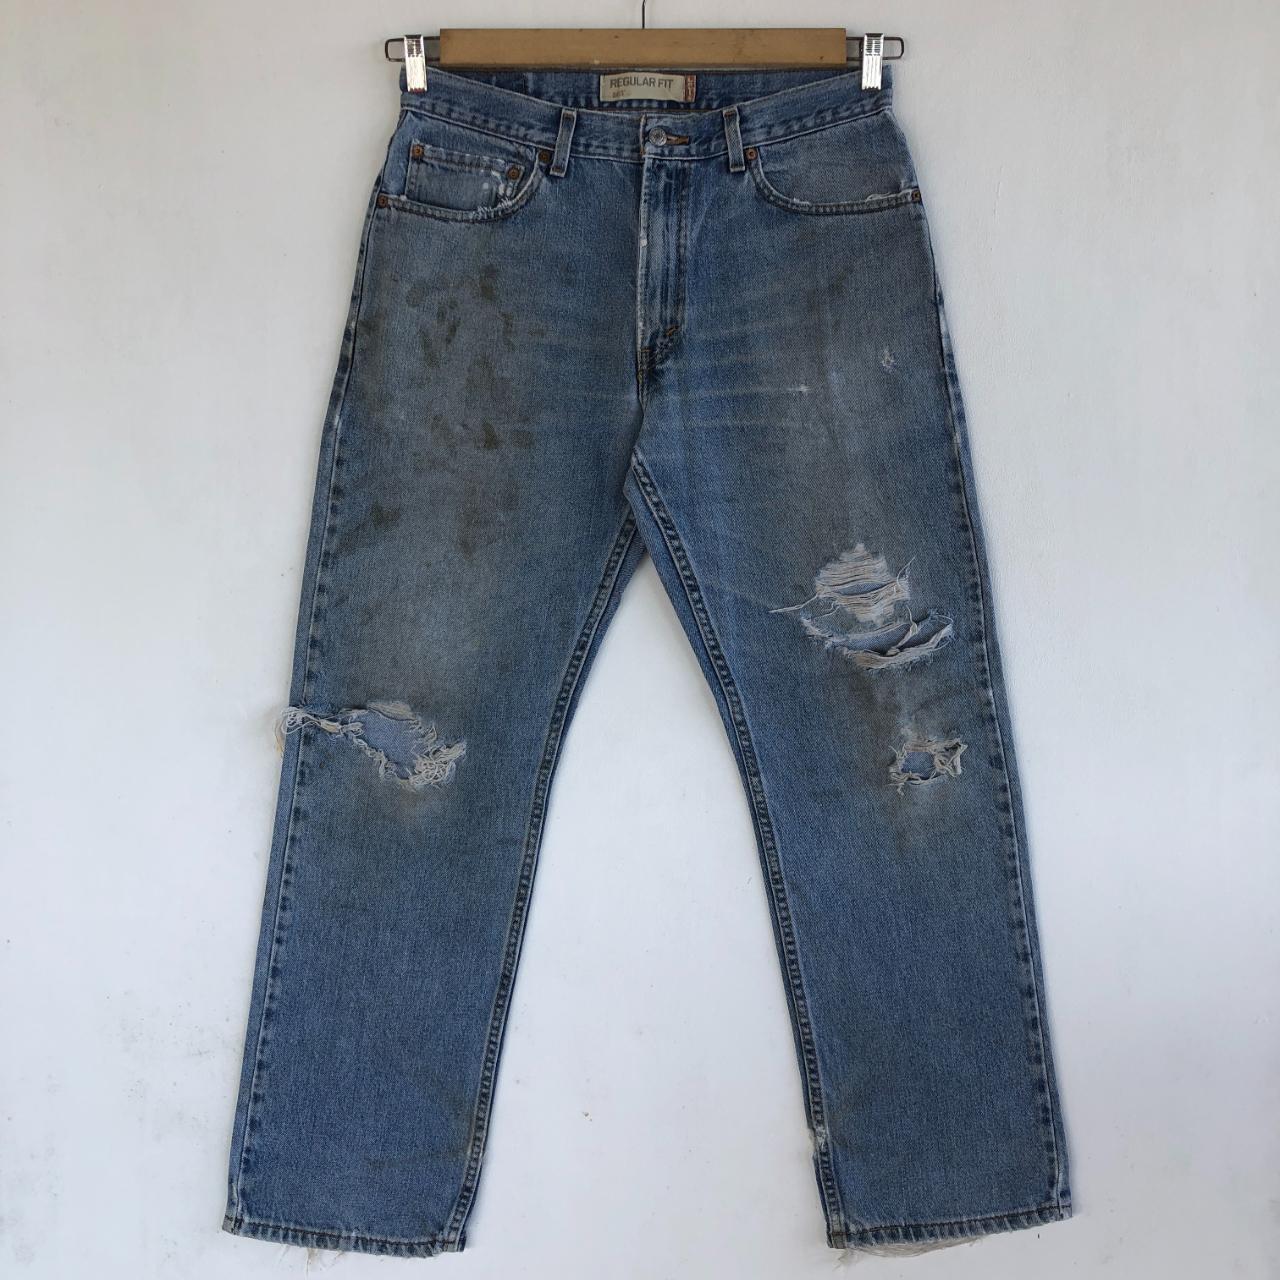 Vintage Levis Jeans Distressed Levis 505 Denim... - Depop